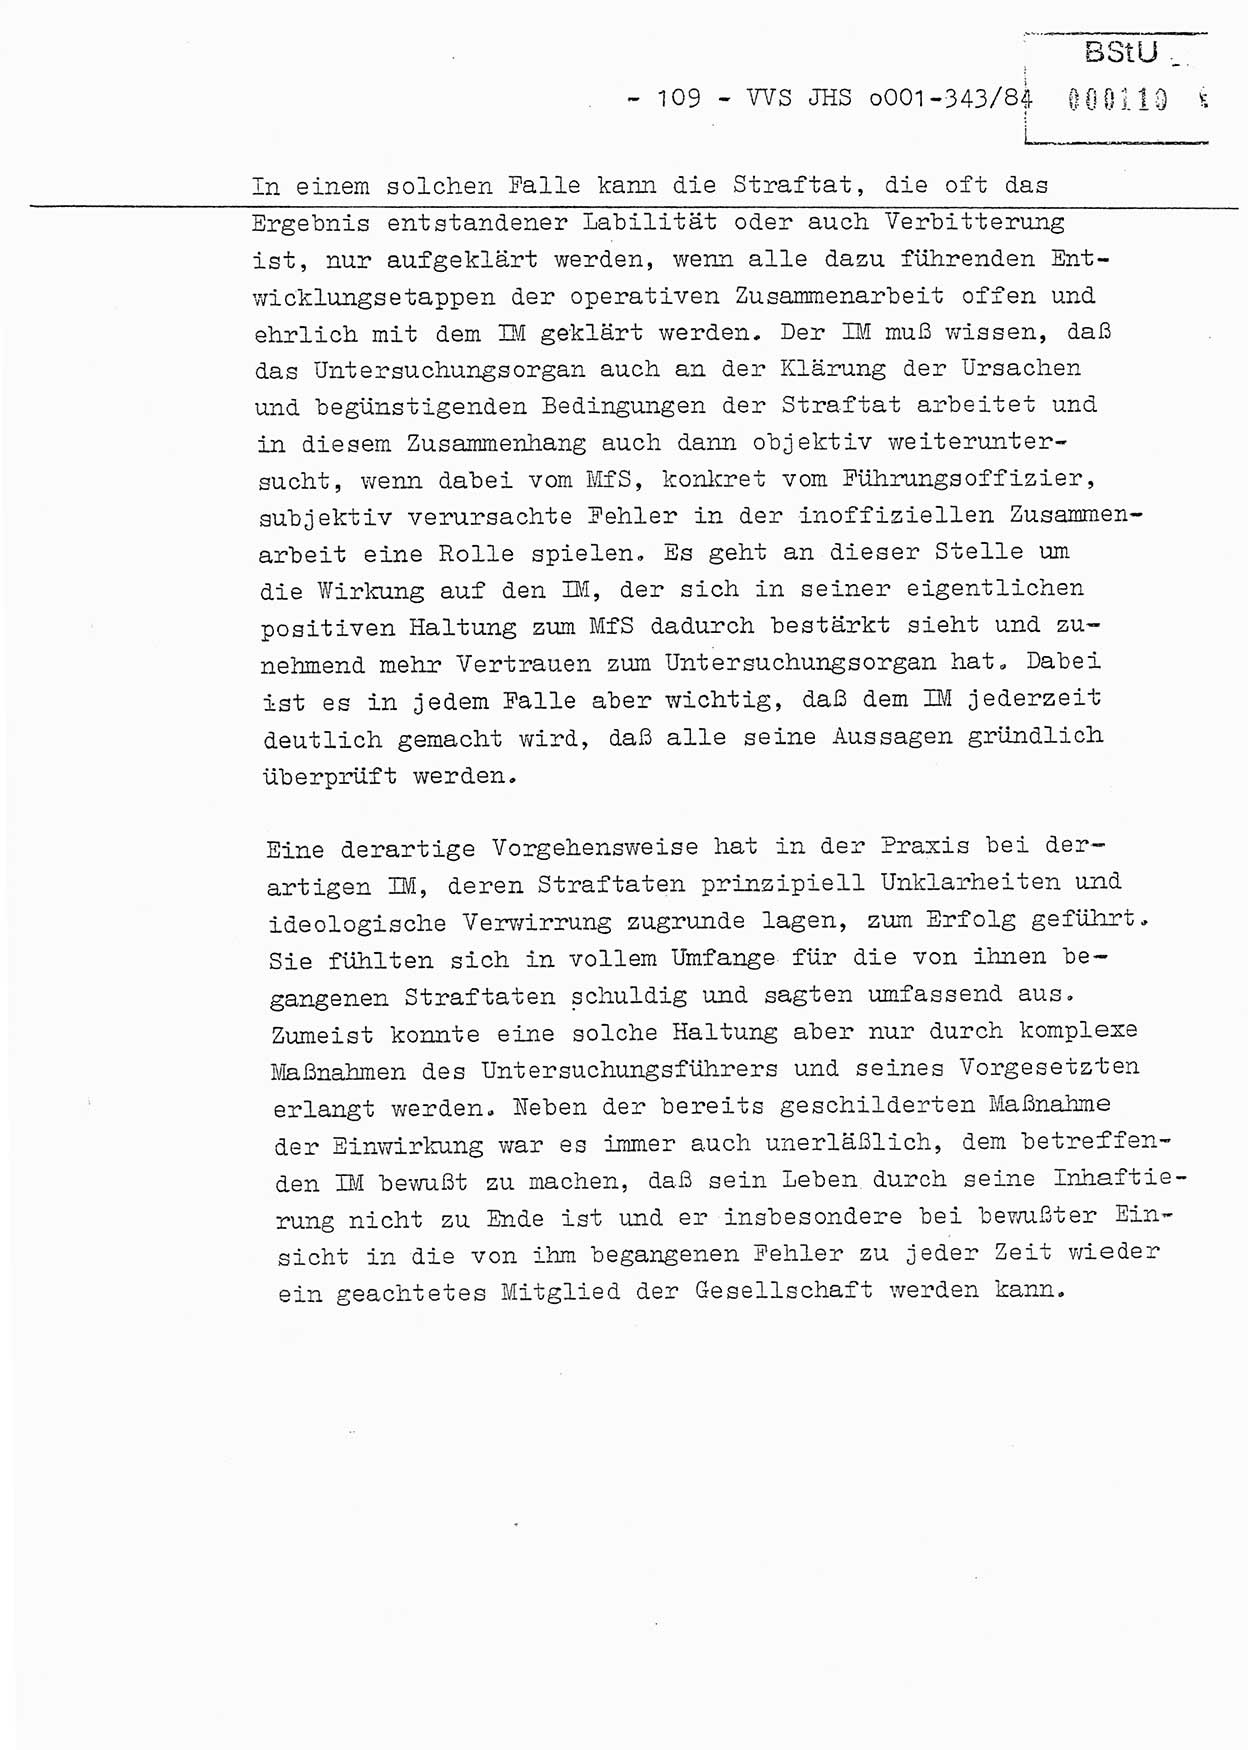 Diplomarbeit, Oberleutnant Bernd Michael (HA Ⅸ/5), Oberleutnant Peter Felber (HA IX/5), Ministerium für Staatssicherheit (MfS) [Deutsche Demokratische Republik (DDR)], Juristische Hochschule (JHS), Vertrauliche Verschlußsache (VVS) o001-343/84, Potsdam 1985, Seite 109 (Dipl.-Arb. MfS DDR JHS VVS o001-343/84 1985, S. 109)